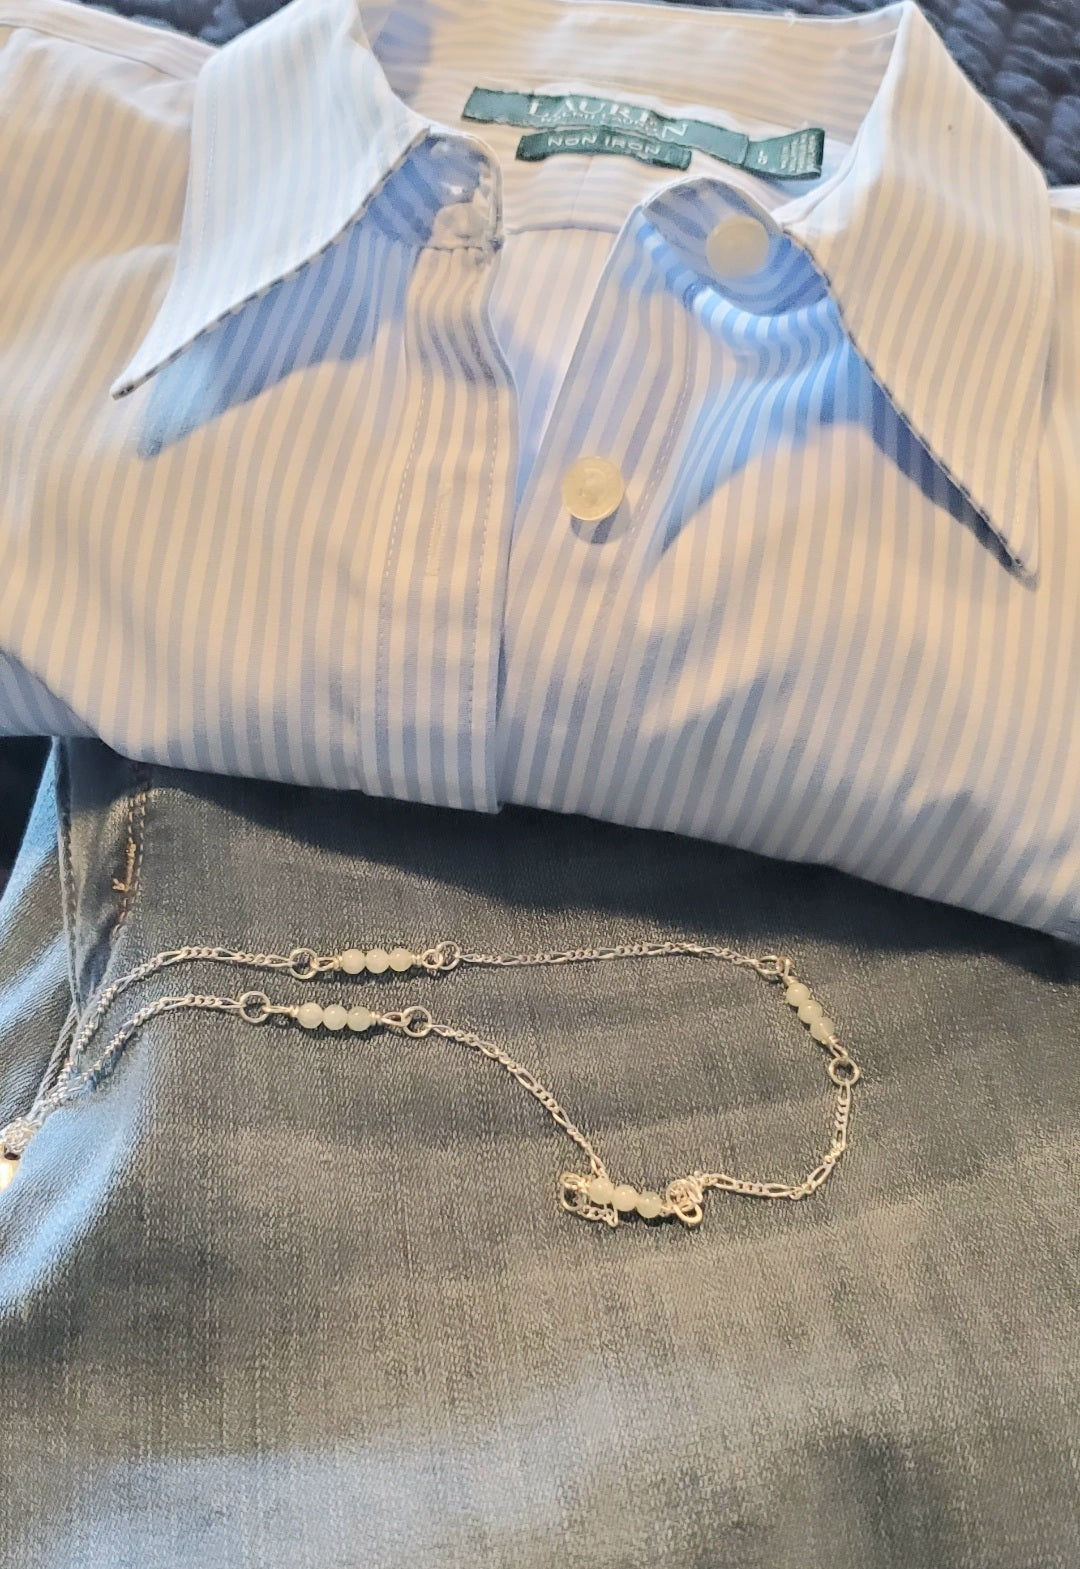 Aqua Serenity Sterling Silver Figaro Necklace